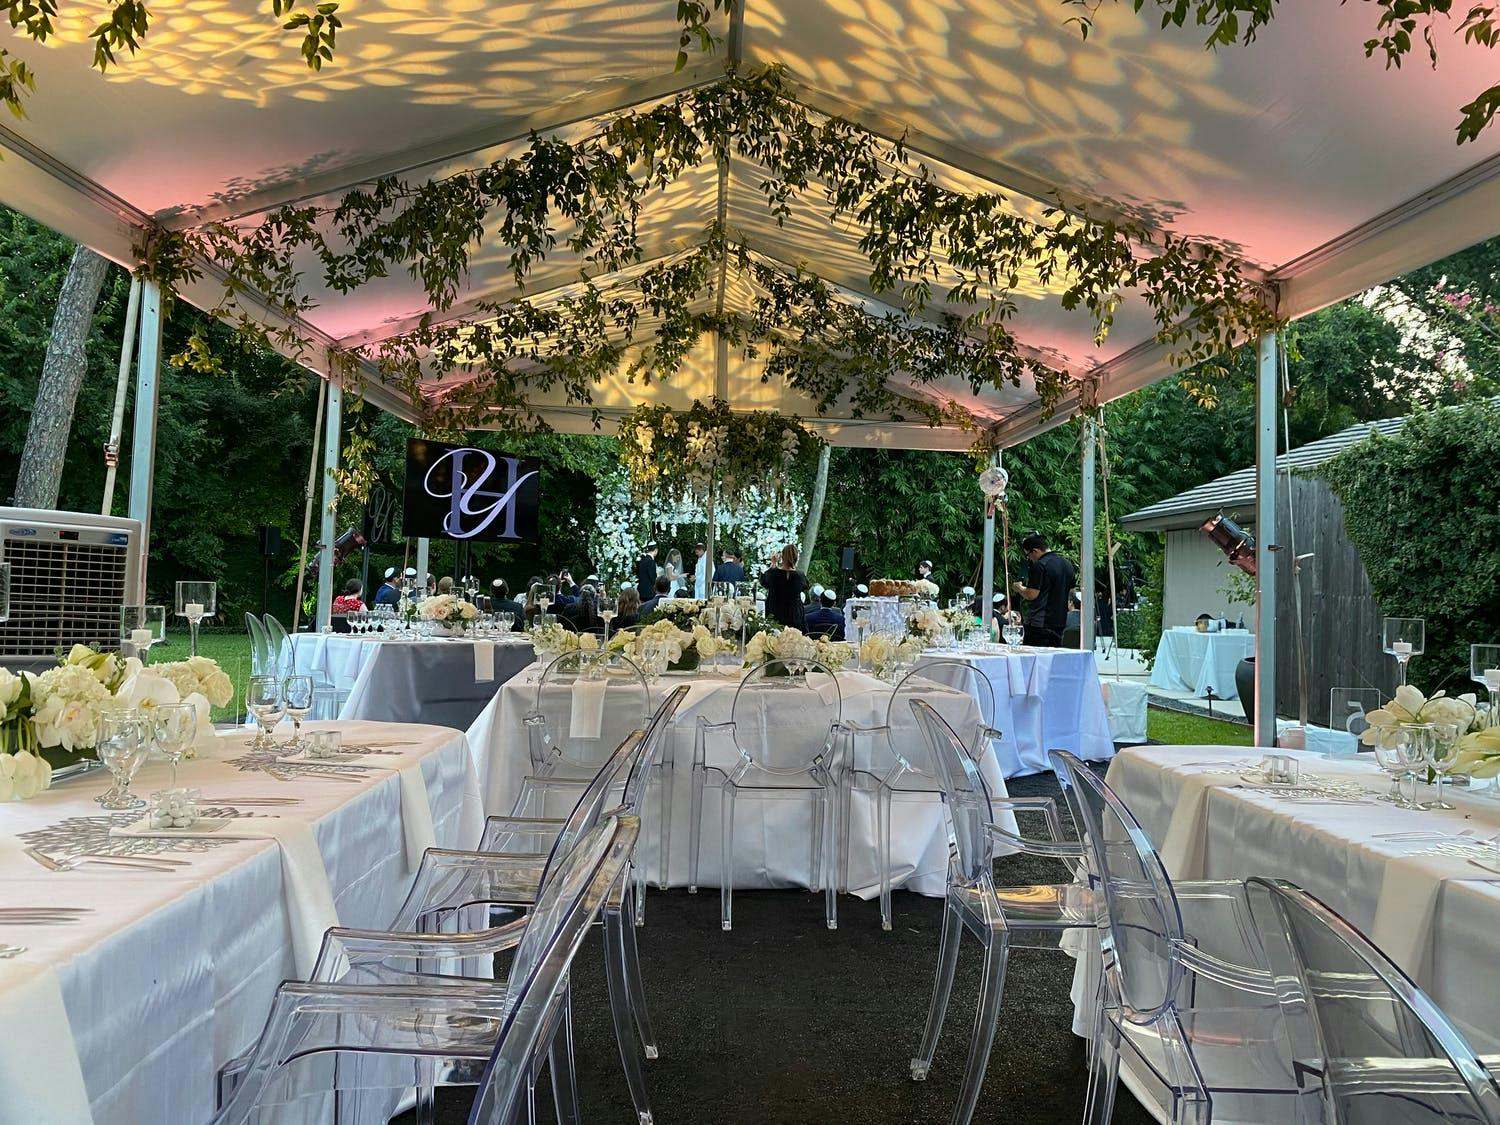 Small Backyard Wedding Tent Reception With Creative Lighting | PartySlate